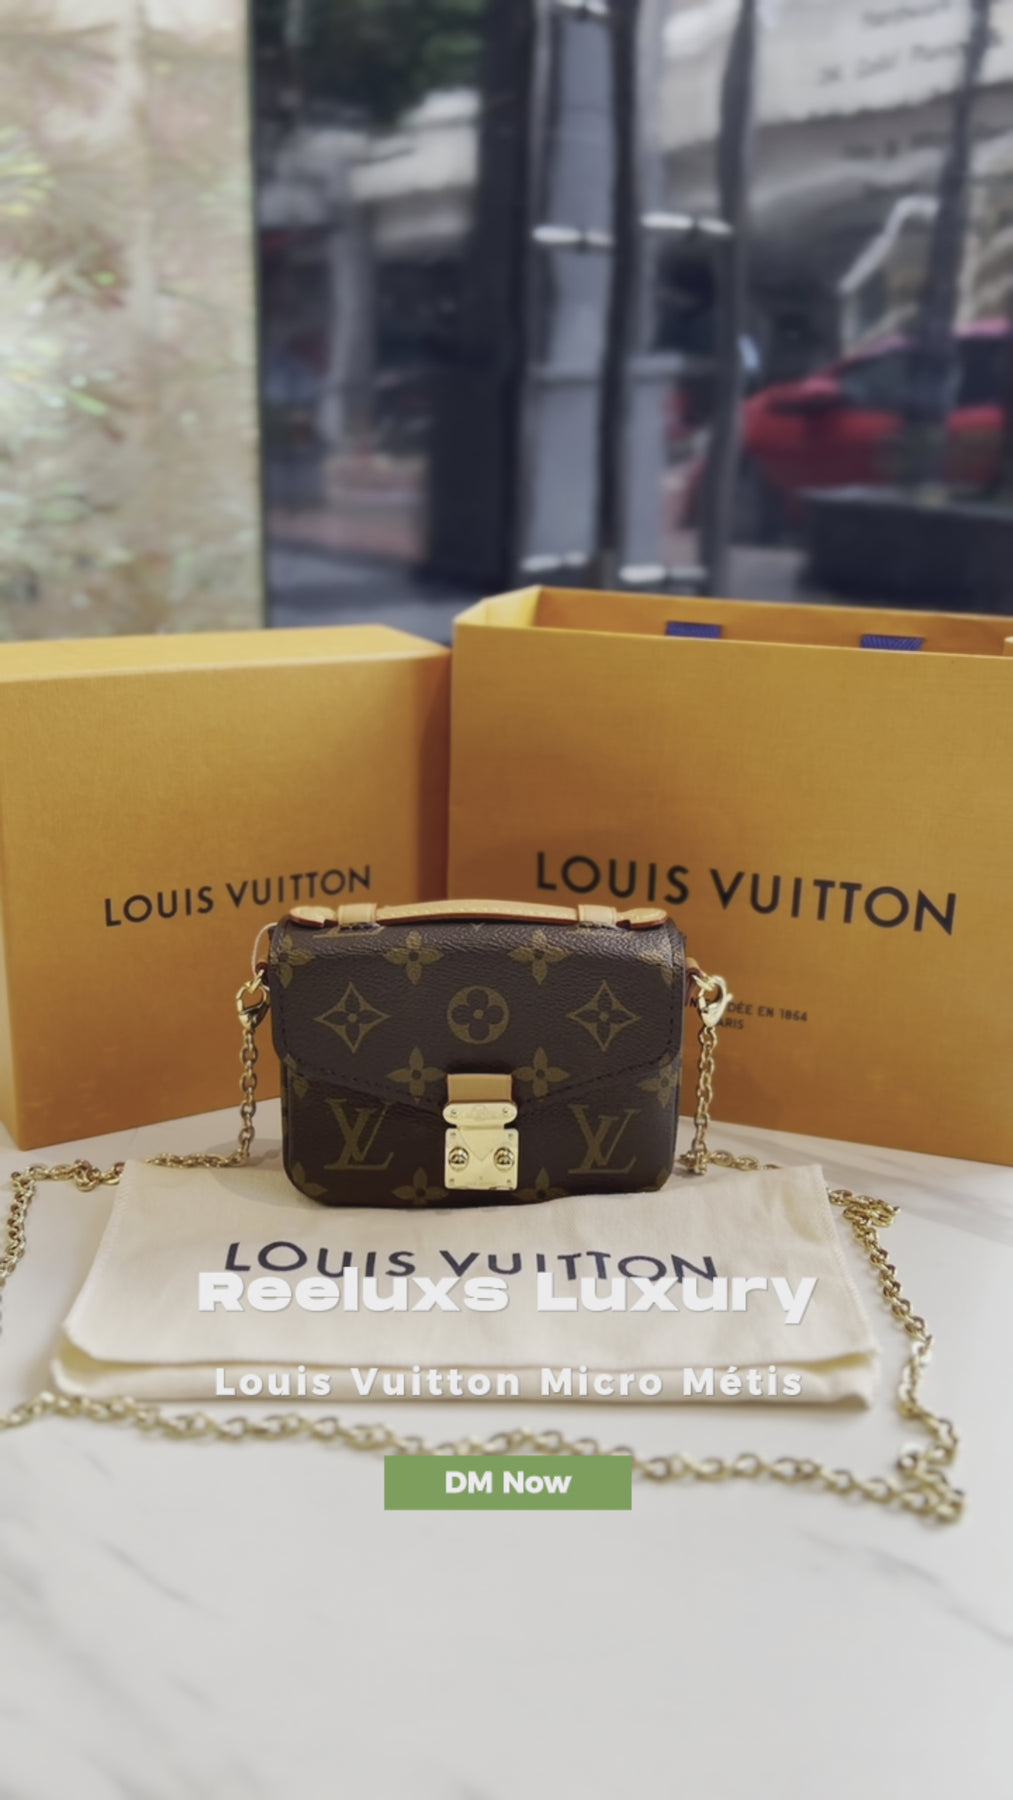 Louis Vuitton Micro Métis – Reeluxs Luxury